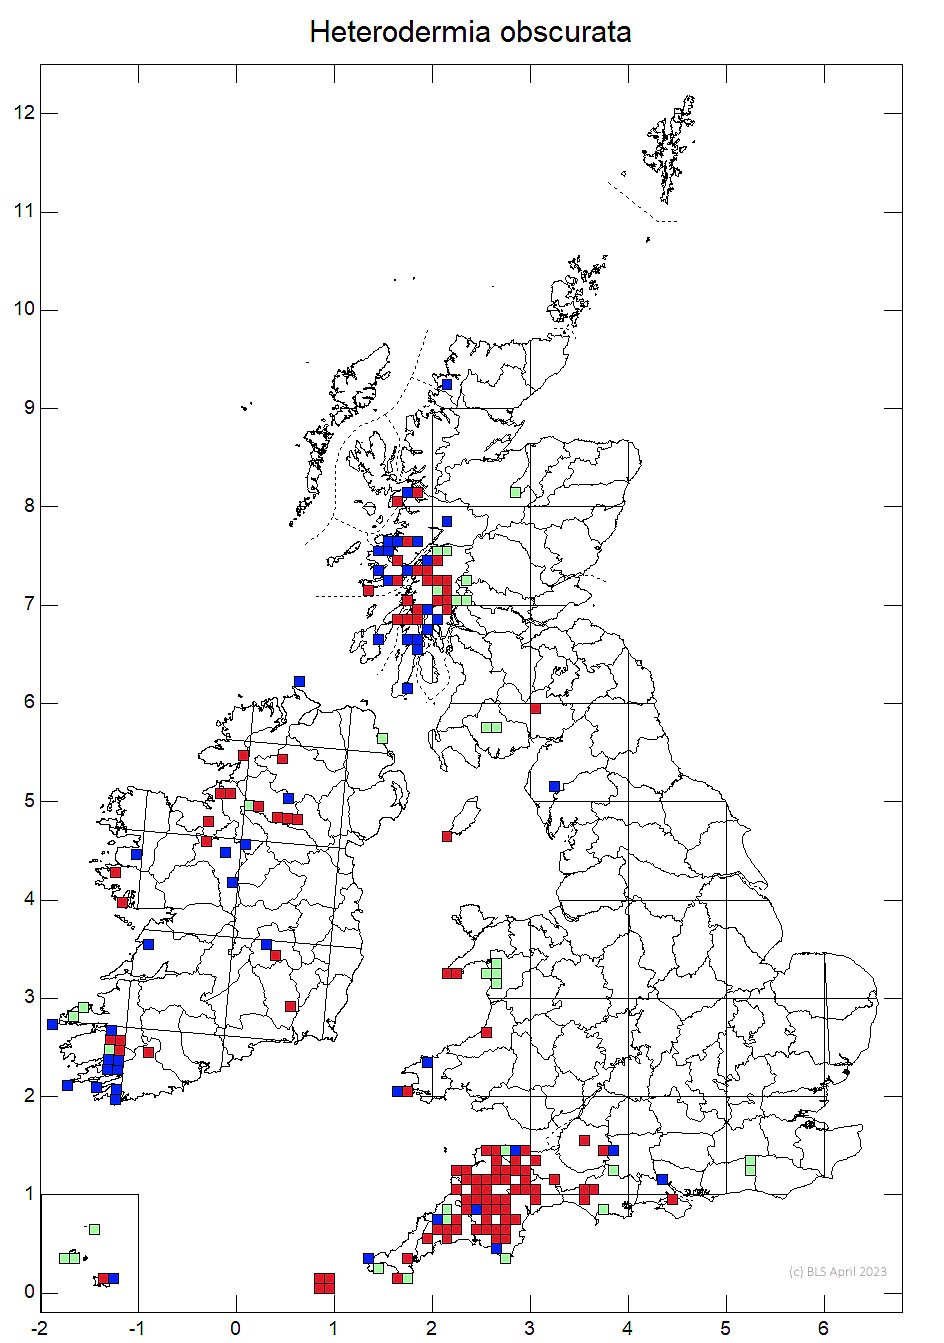 Heterodermia obscurata 10km sq distribution map